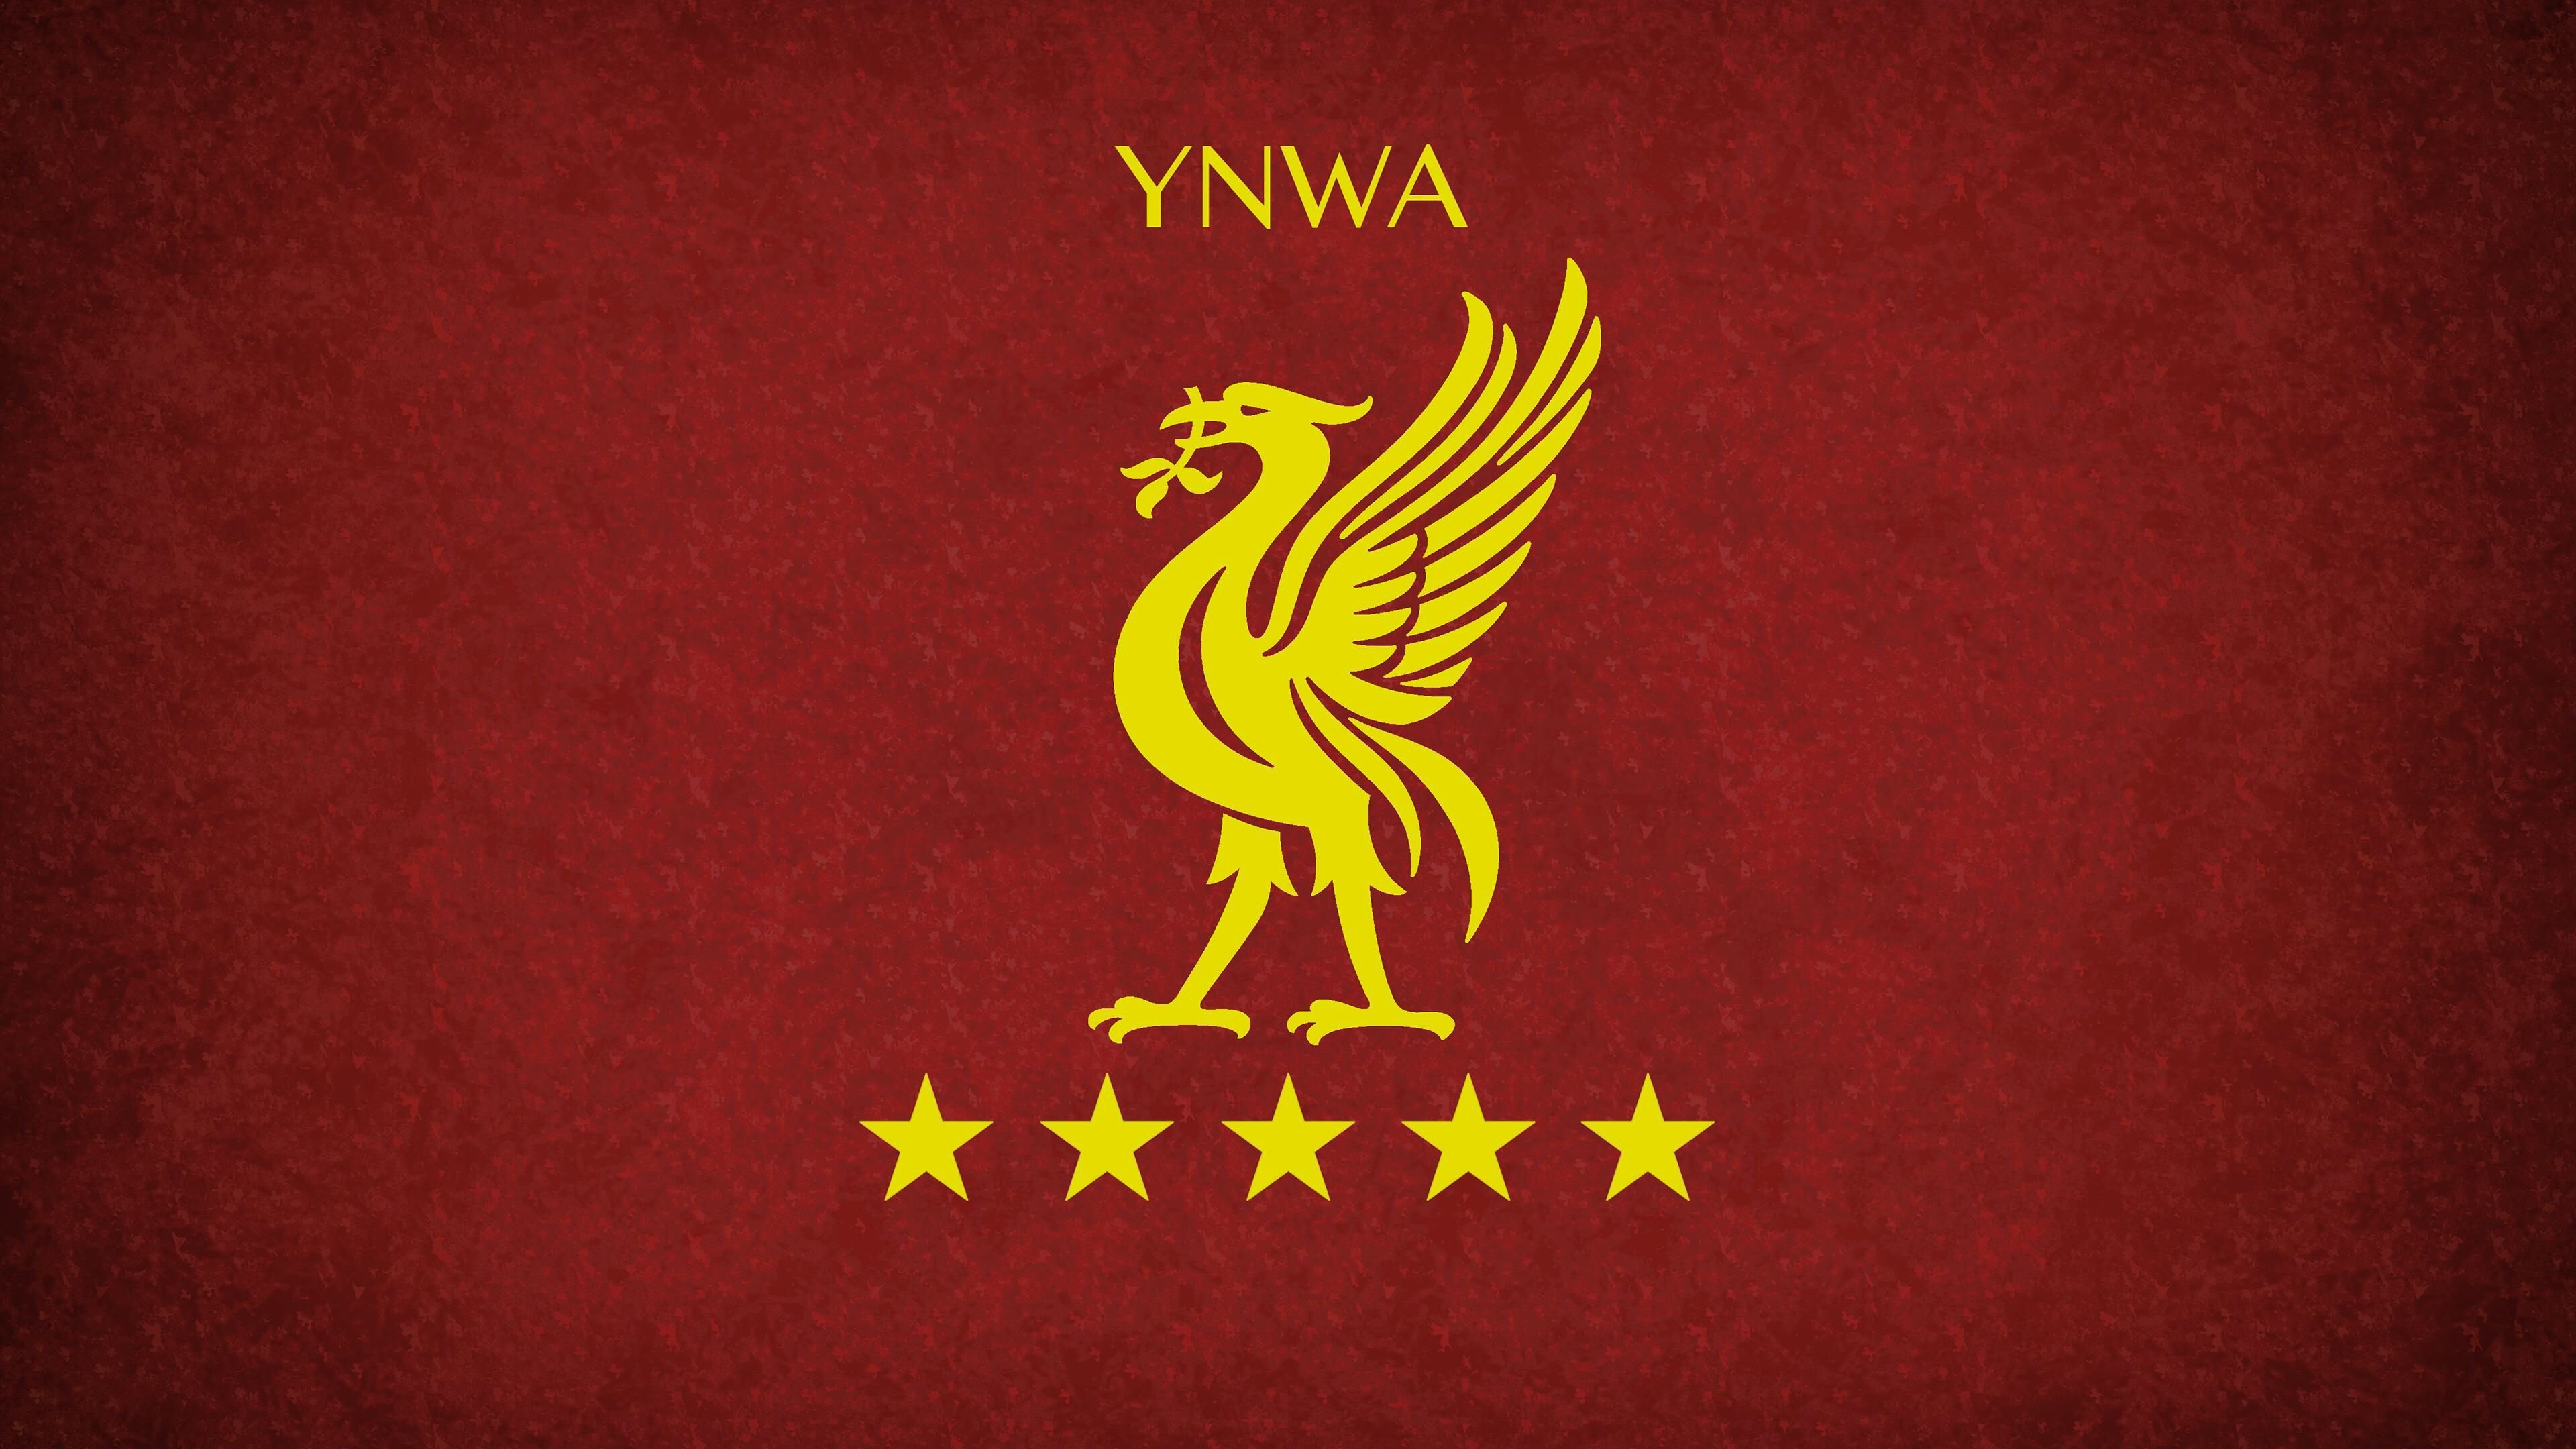 Liverpool YNWA